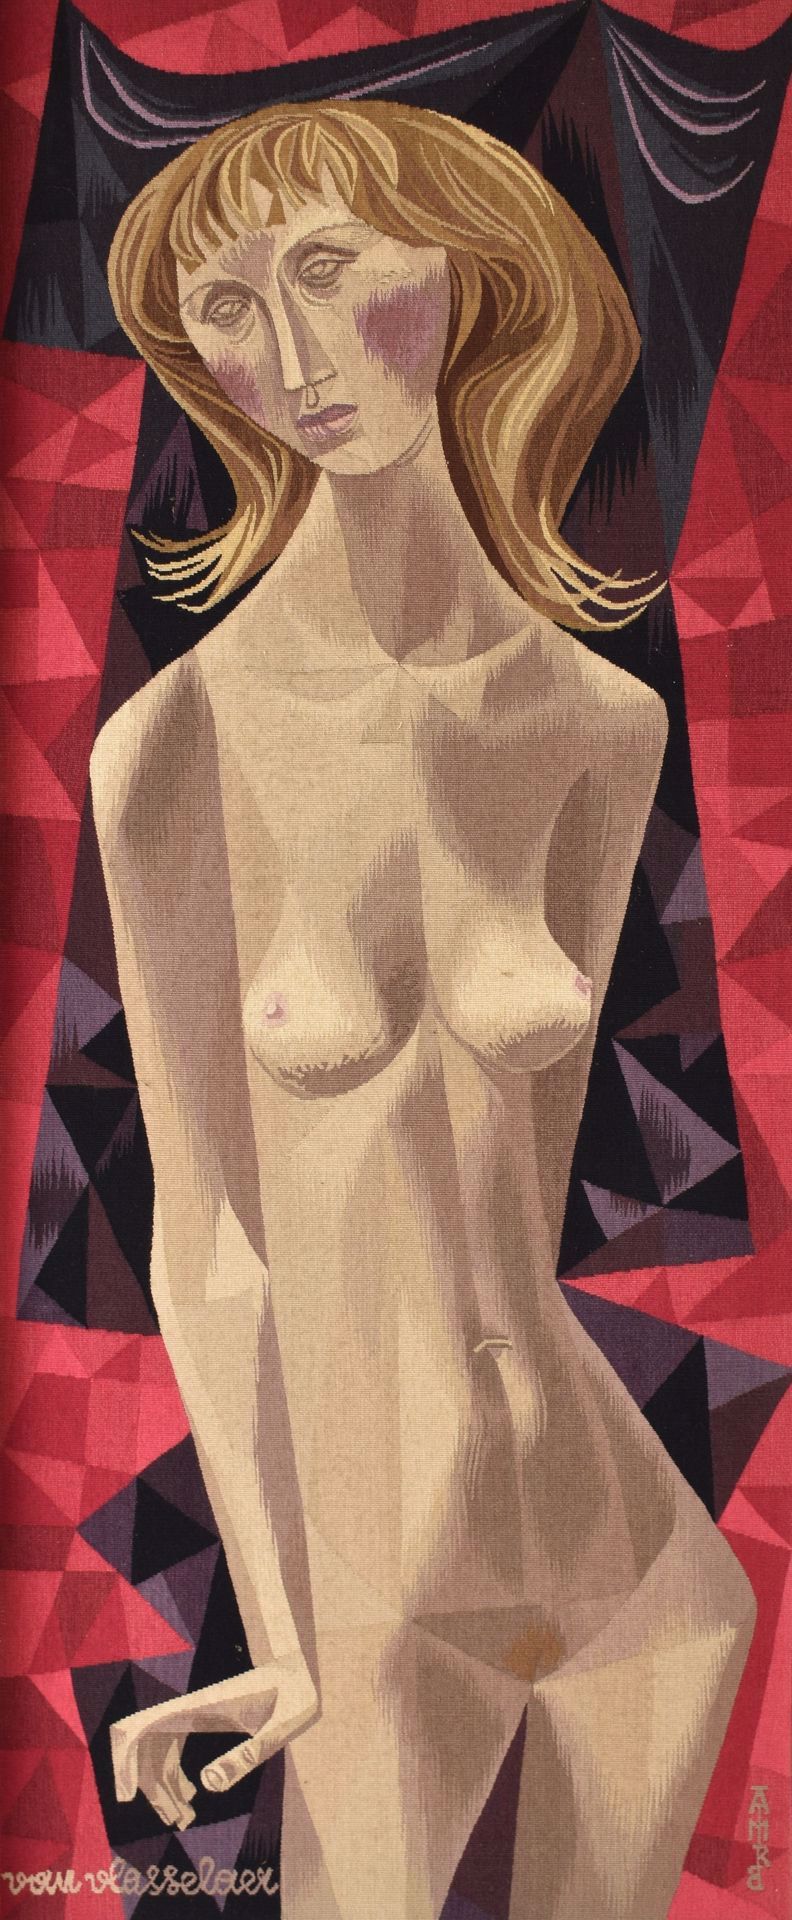 VAN VLASSELAER Desnudo. Tapiz, 126 x 53.